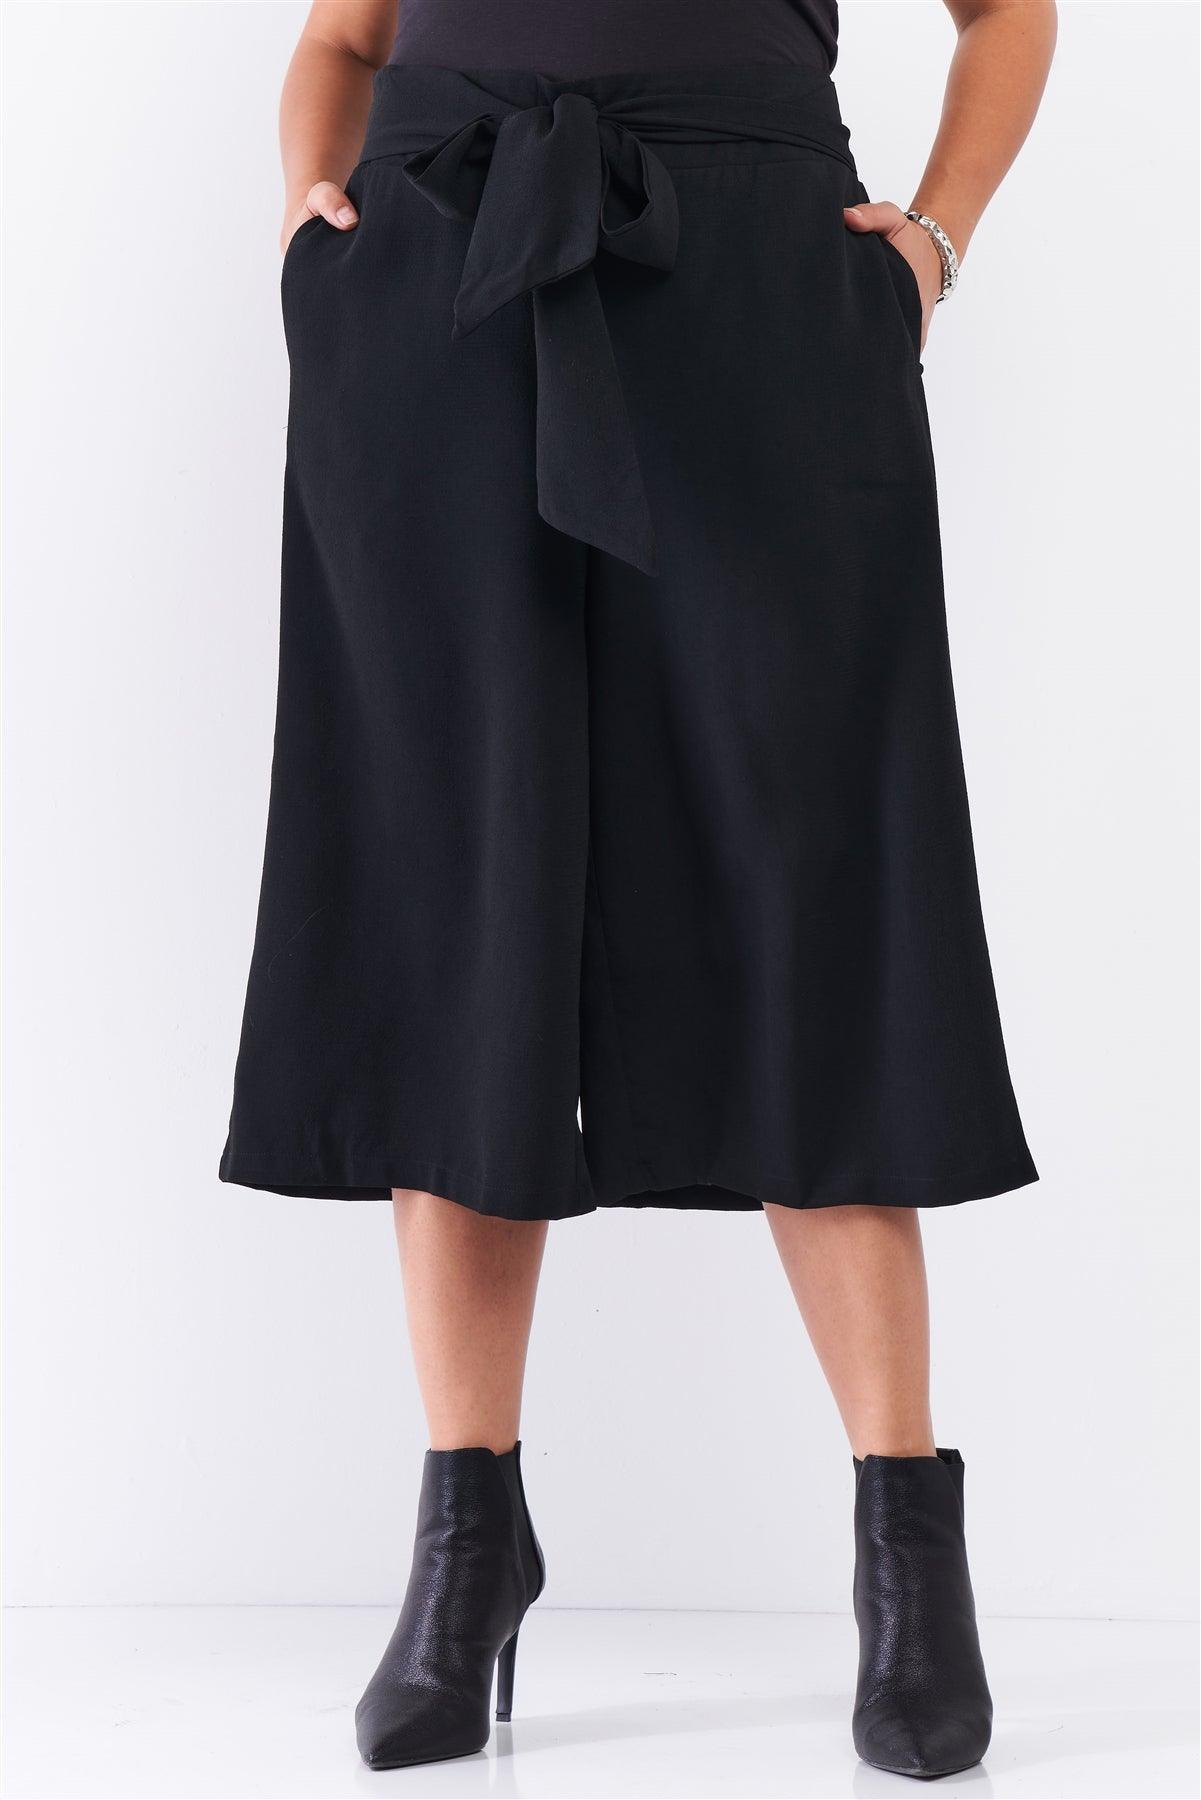 Junior Plus Black Self-Tie High Waist Detail Wide Leg Midi Length Pants /1-2-2-1